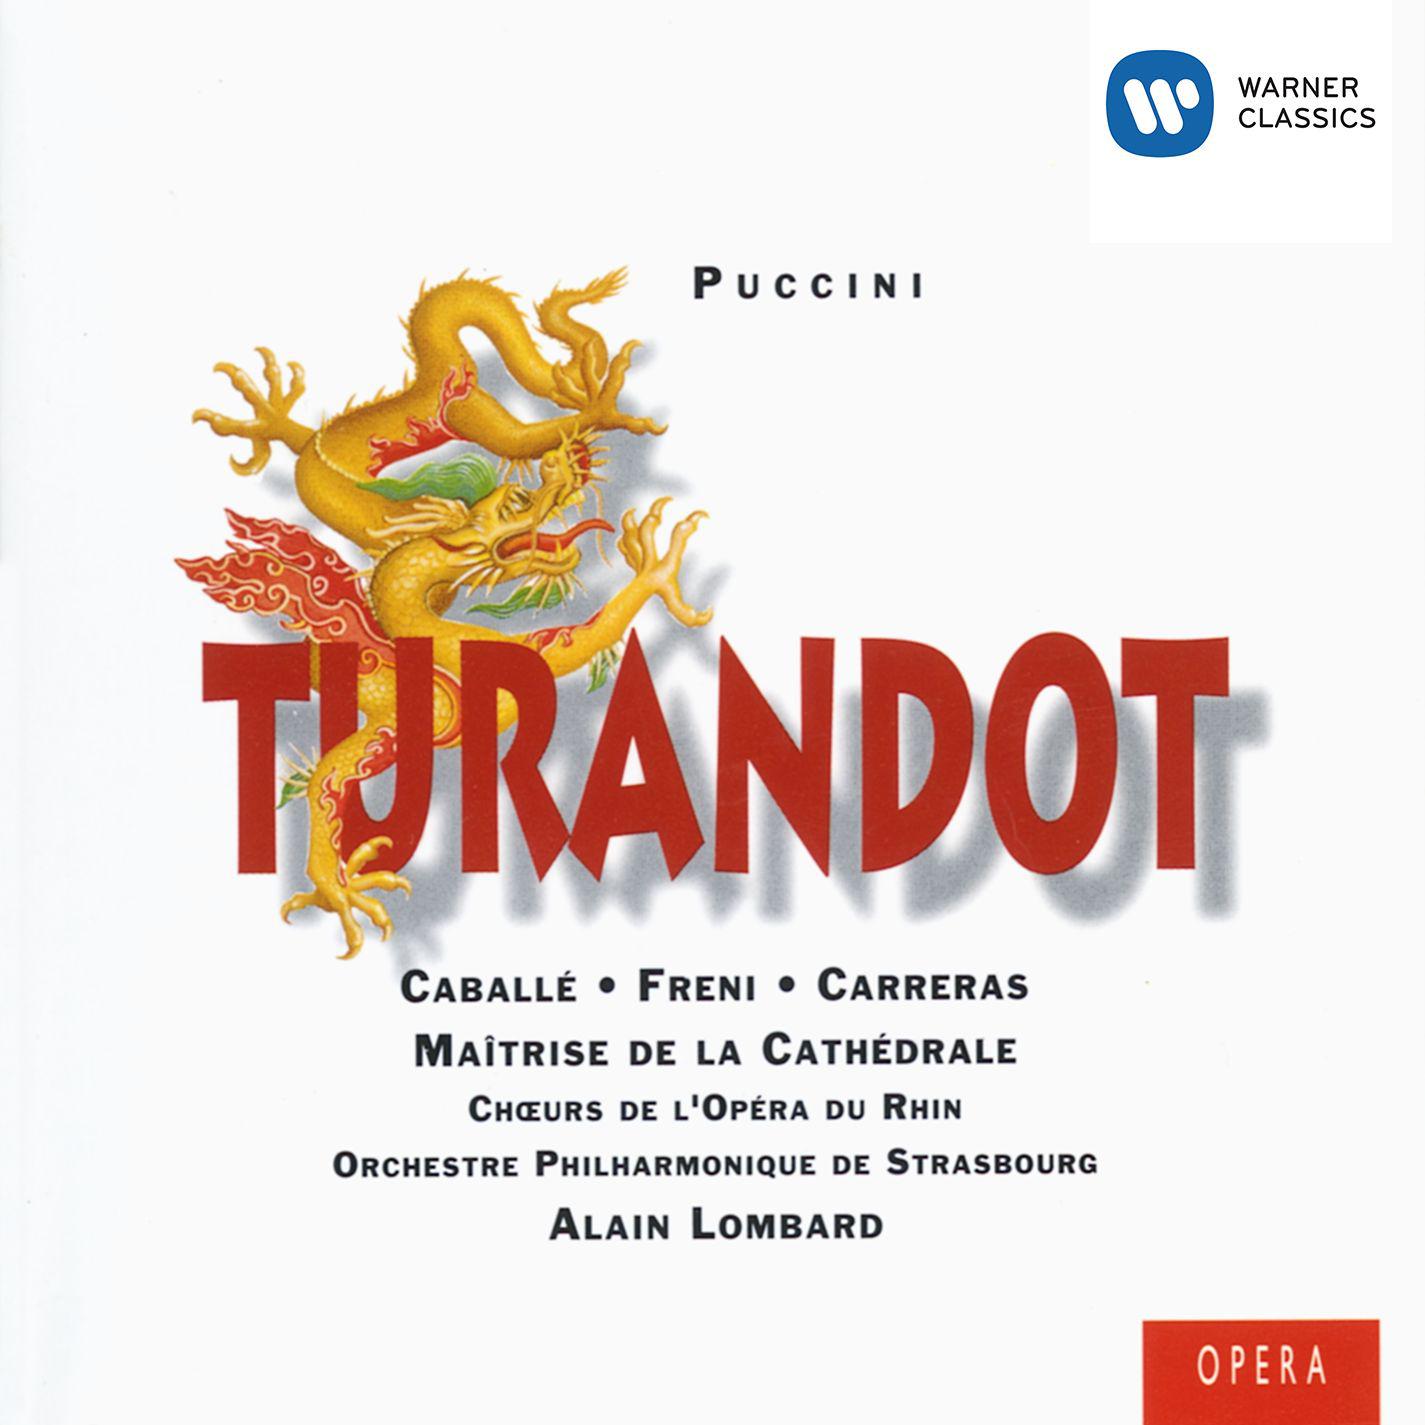 Turandot (1994 Remastered Version), Act I: Gira la cote! Gira! (Crowd, Executioner's men)